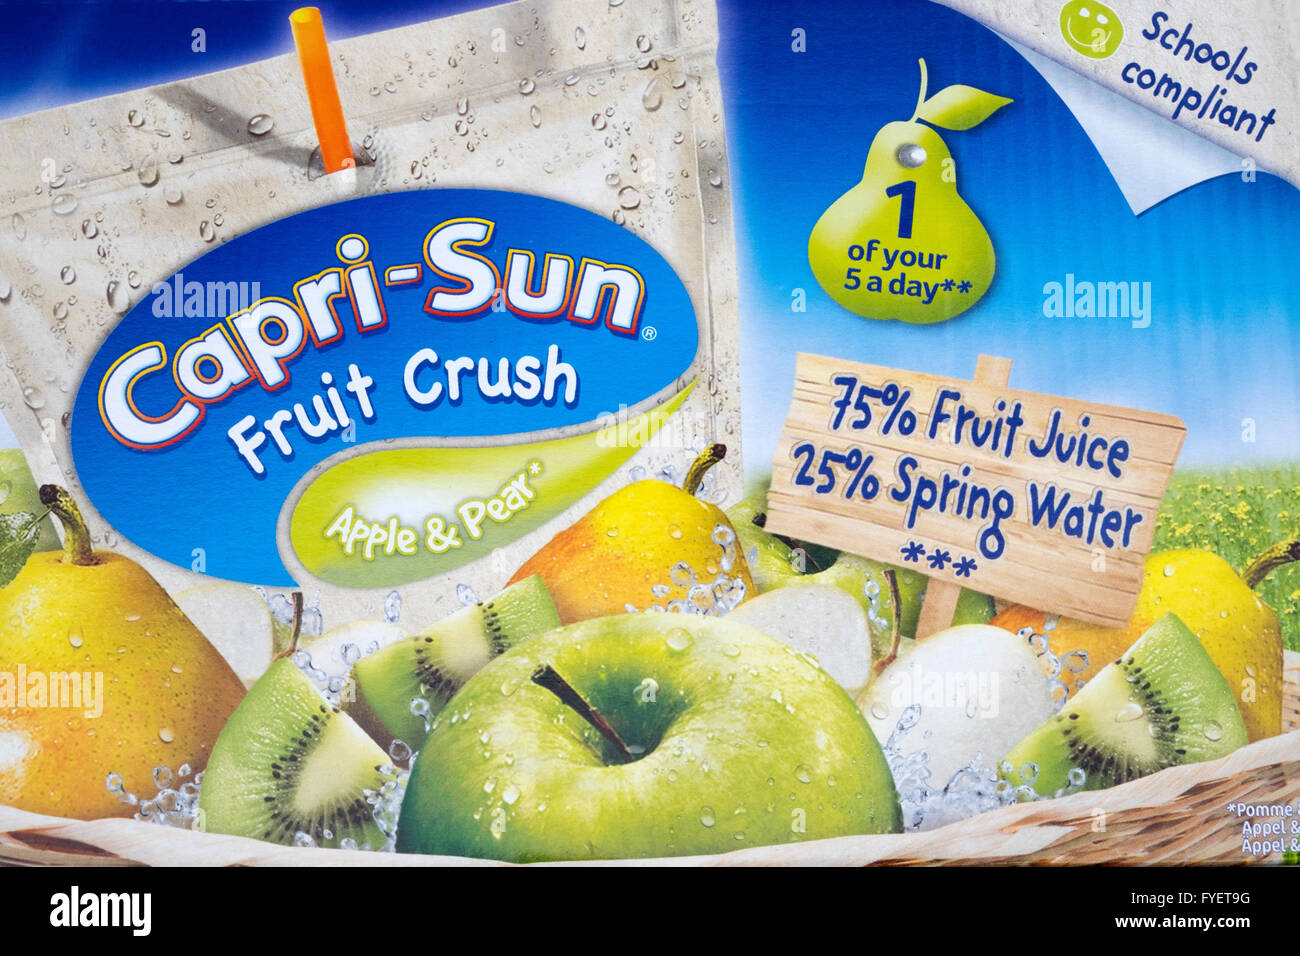 Capri-Sun Apple and Pear Fruit Crush drink Stock Photo